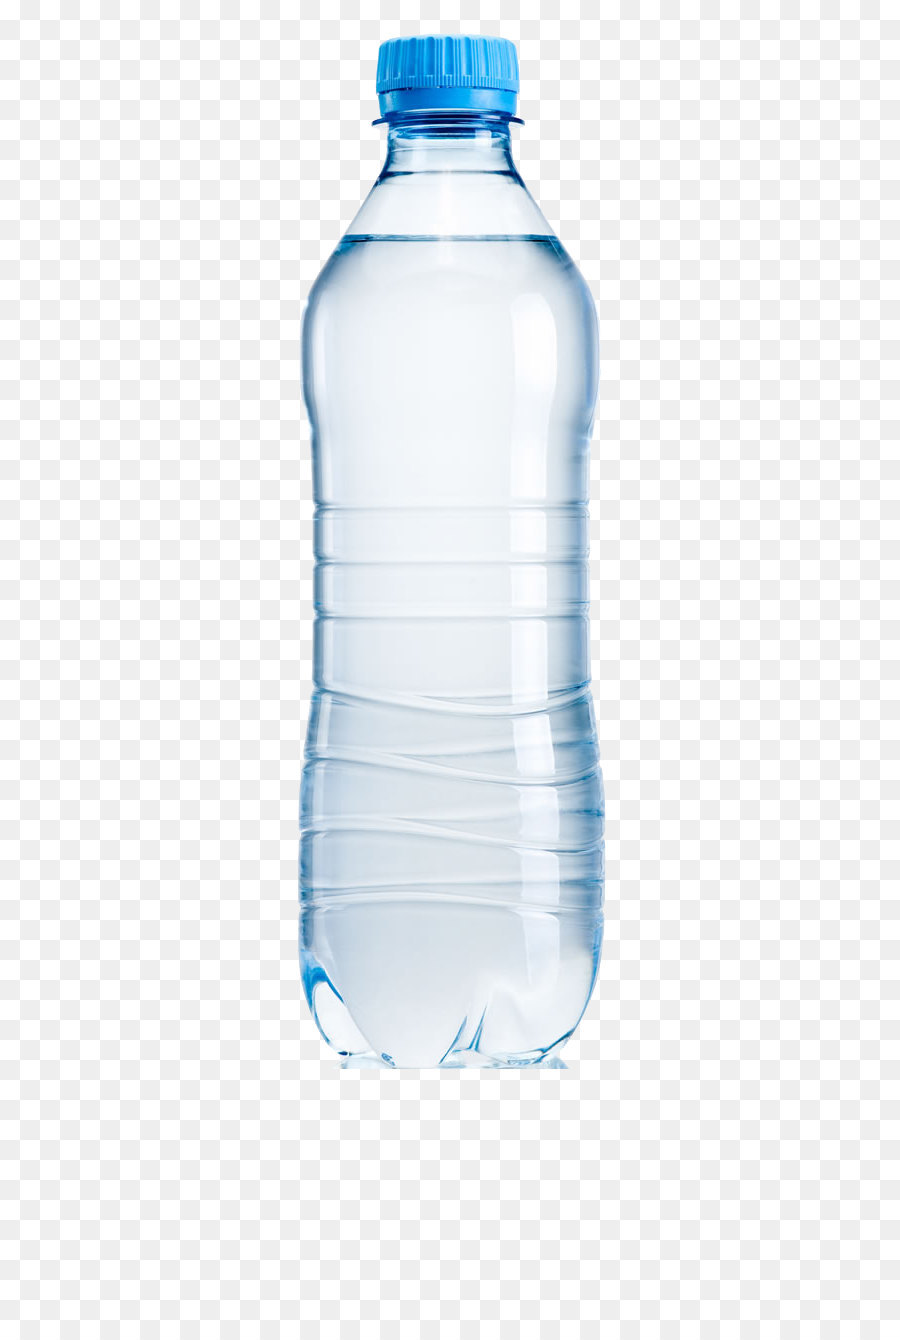 Soft drink Water bottle Bottled water Mineral water - Mineral water bottles png download - 650*1336 - Free Transparent Fizzy Drinks png Download.